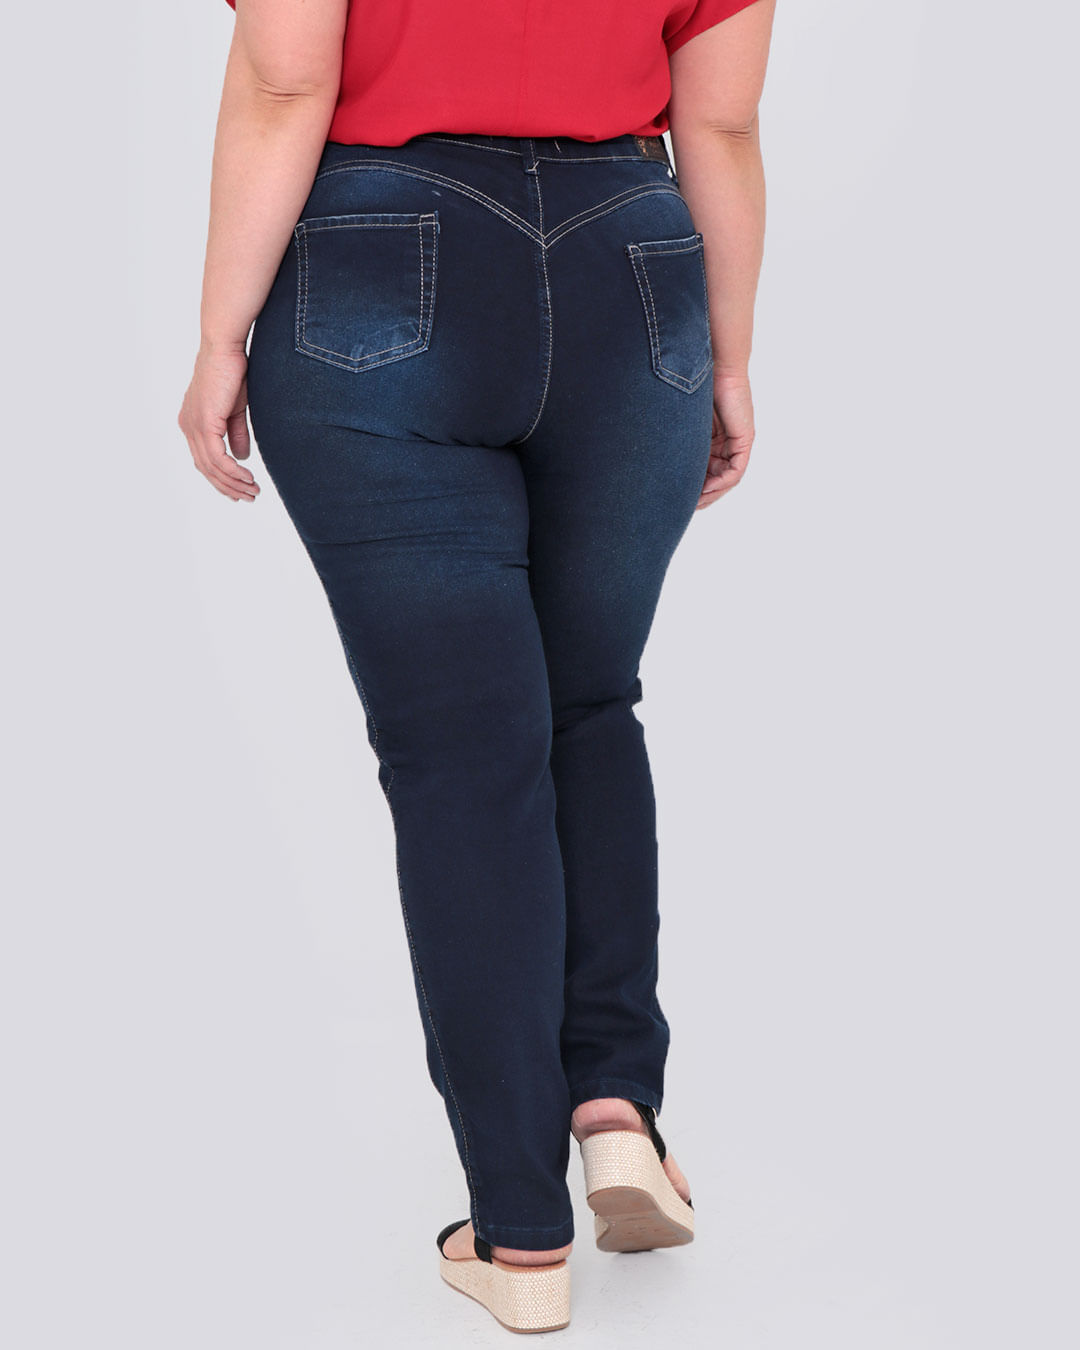 Calca-Jeans-Feminina-Plus-Size-Reta-Azul-Escuro